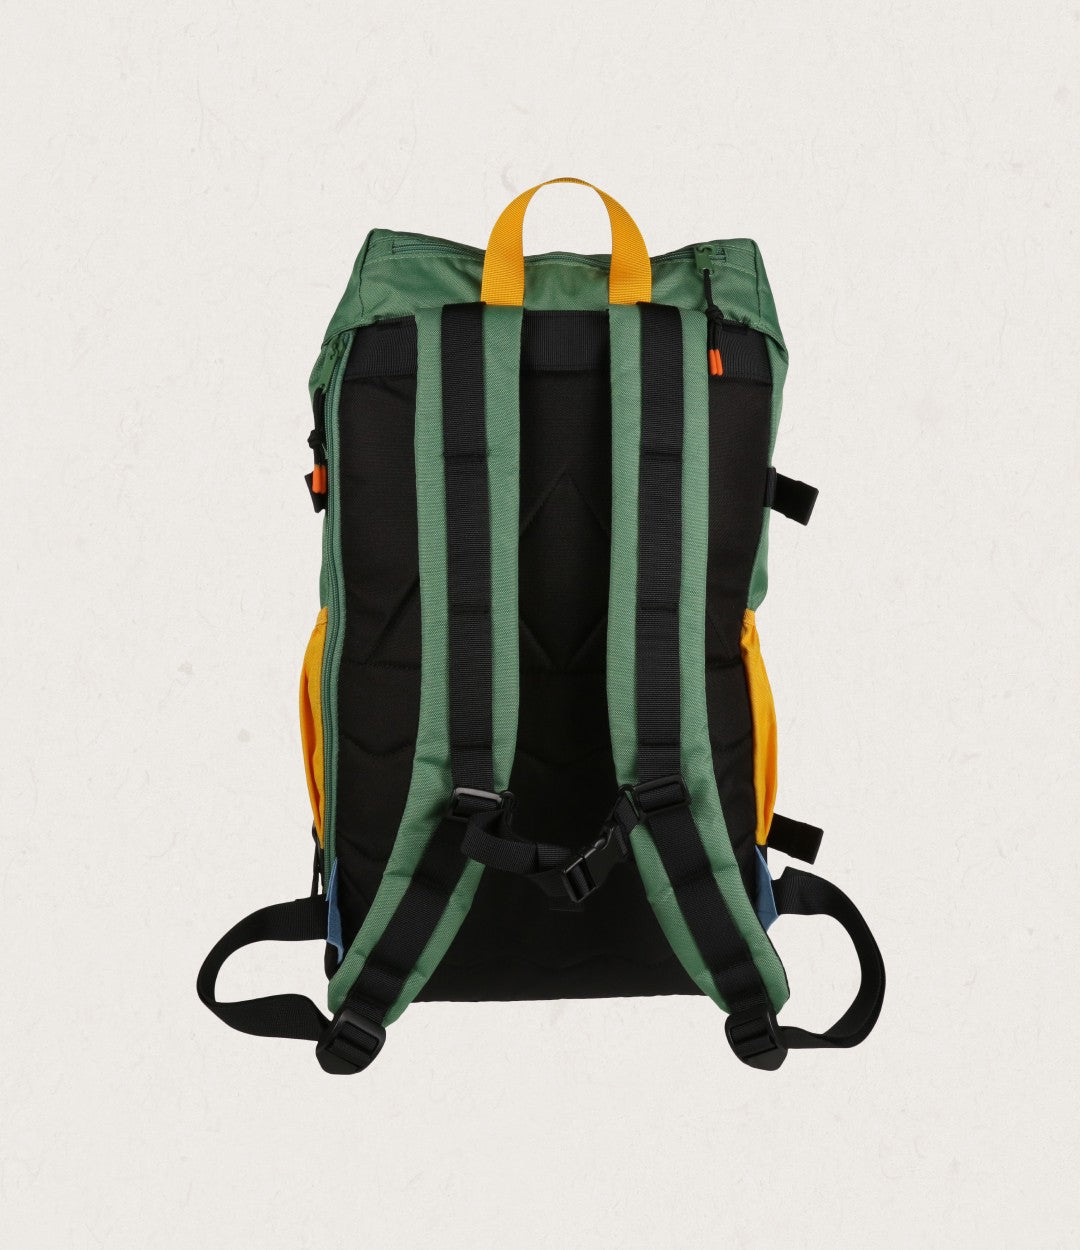 Boondocker Recycled 26L Backpack - Laurel Green